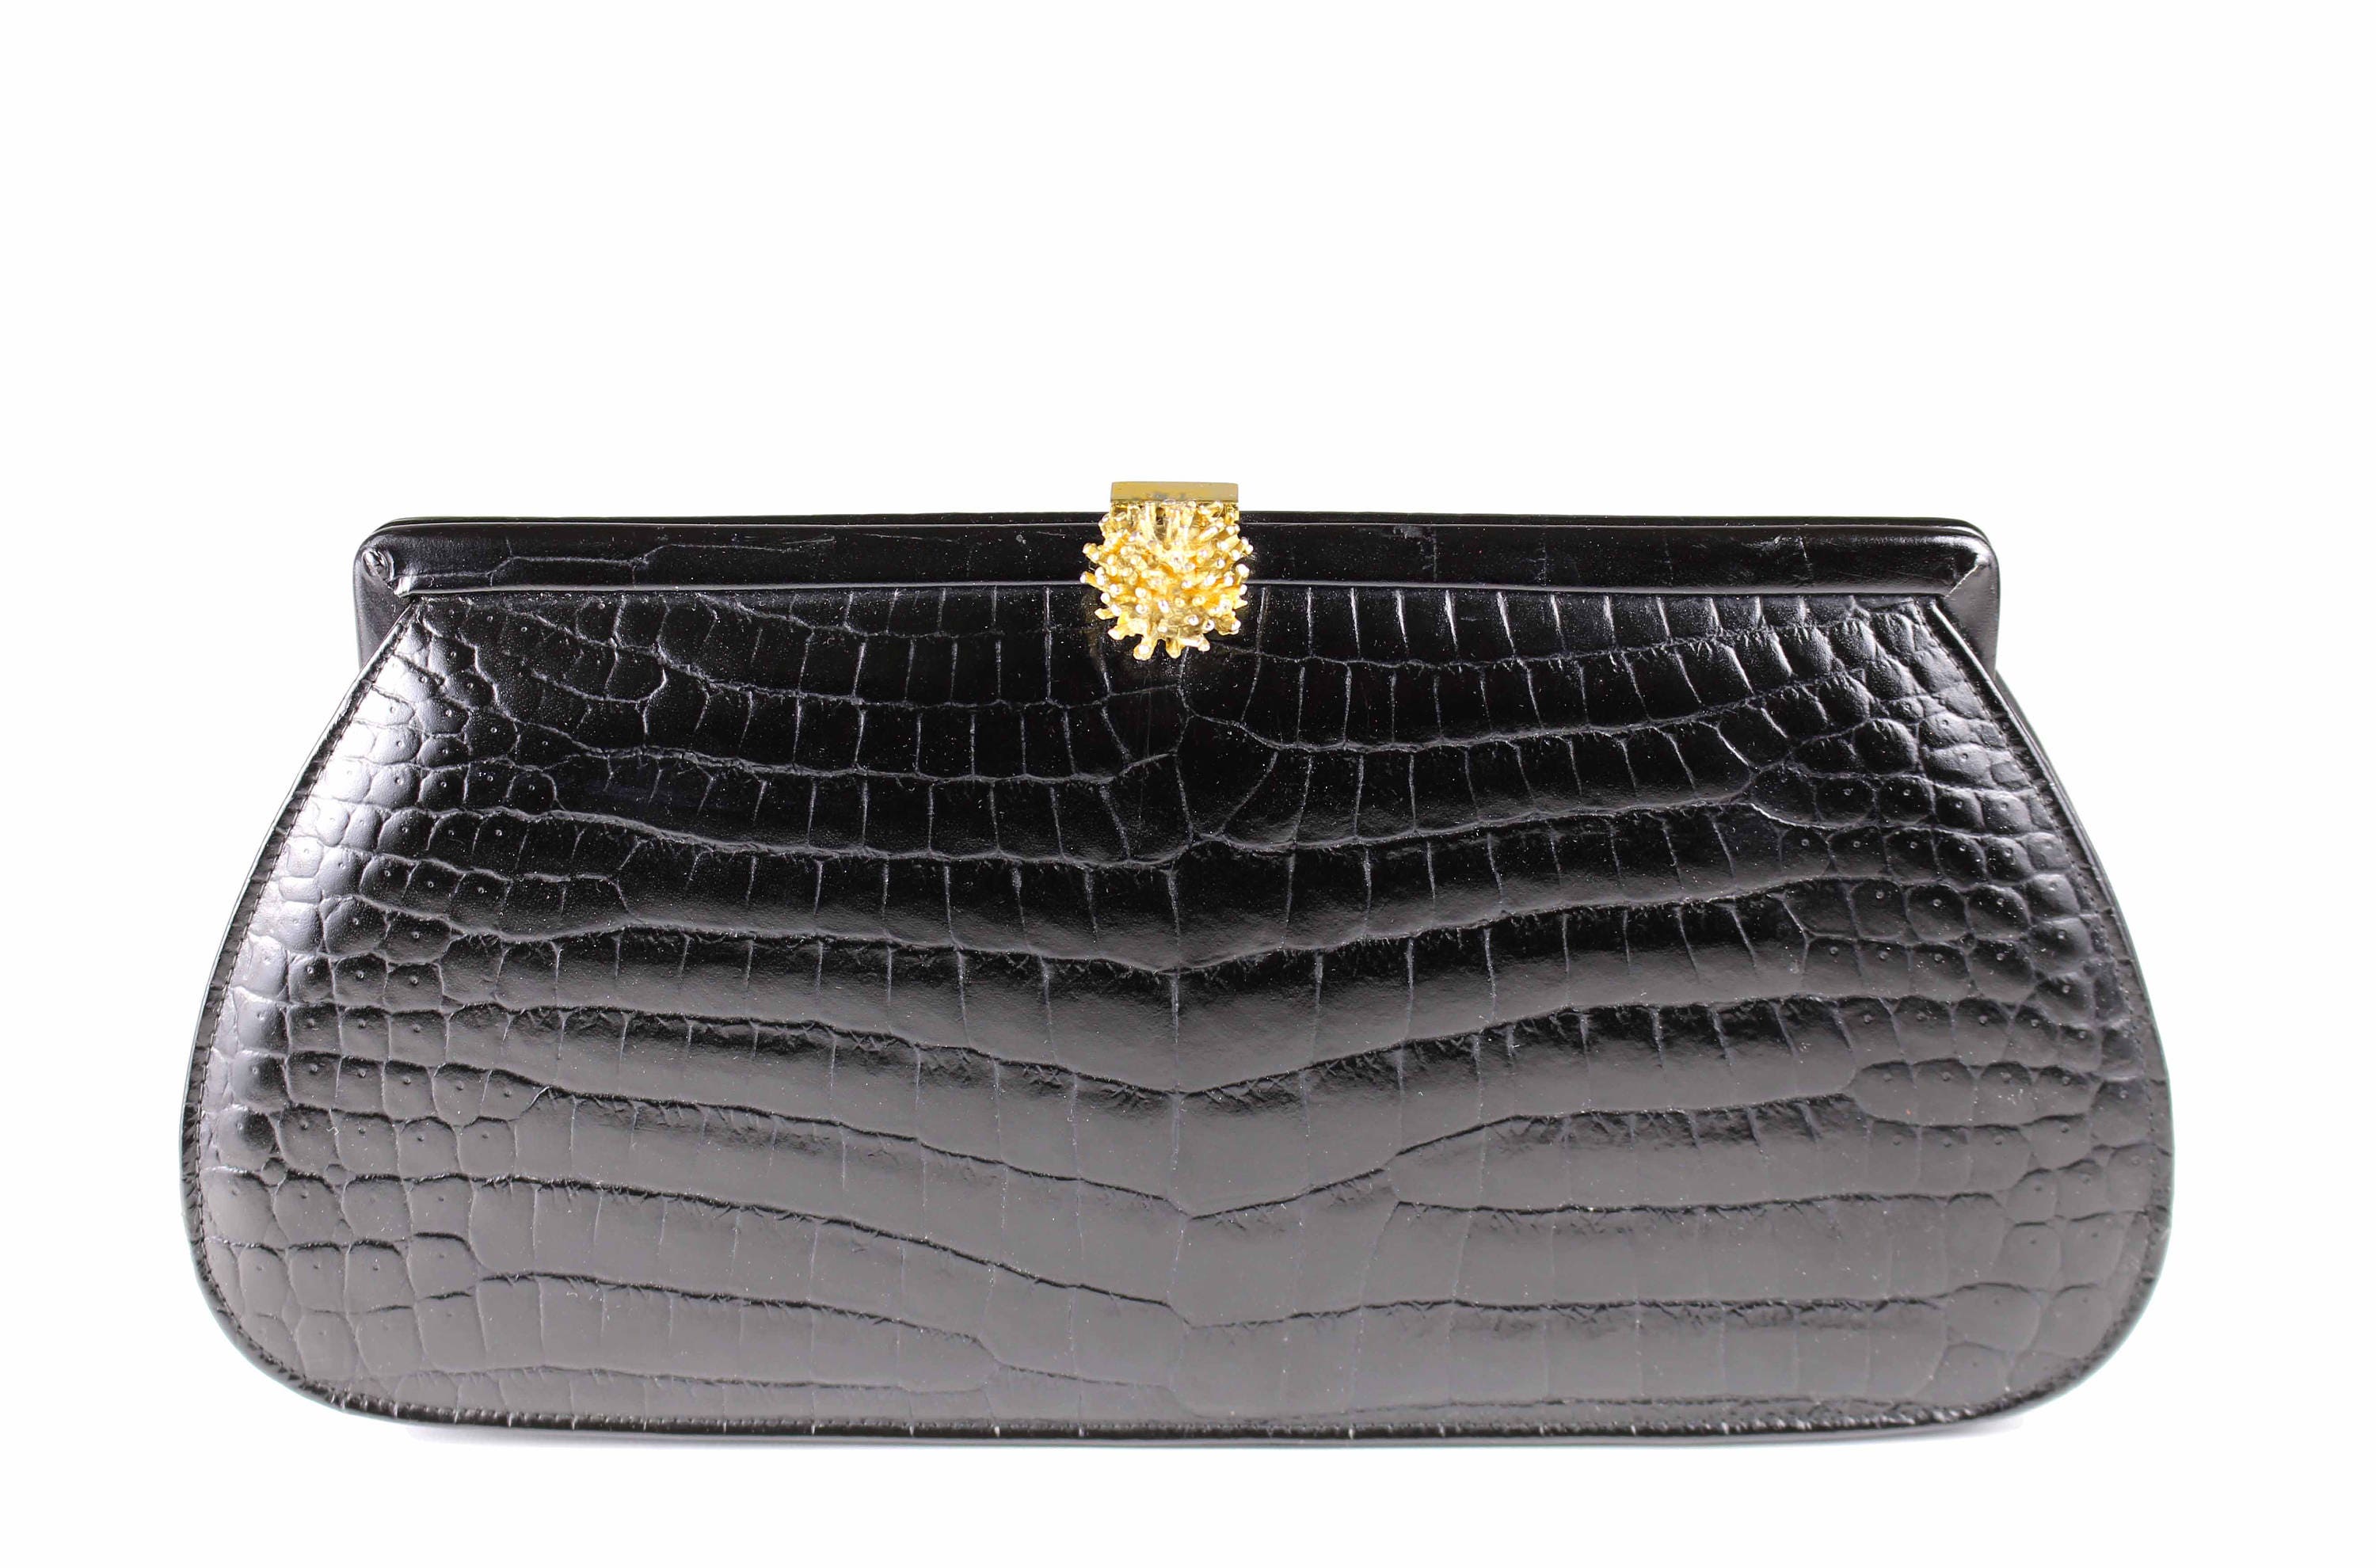 DOFAN Black Leather Handbag 